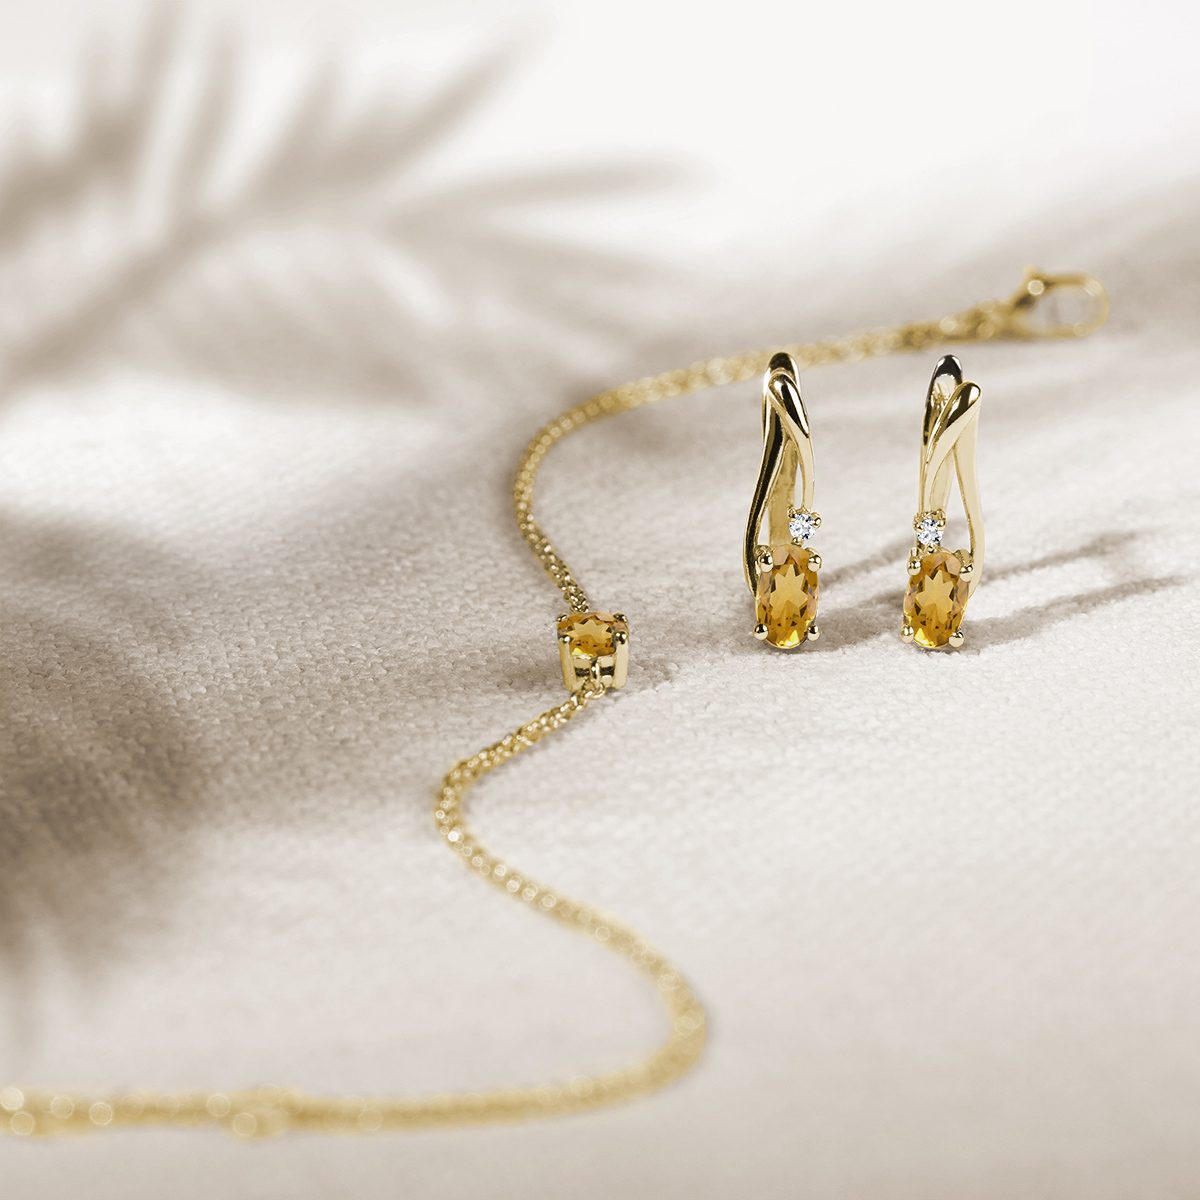 citrine jewellery made of yellow gold - KLENOTA